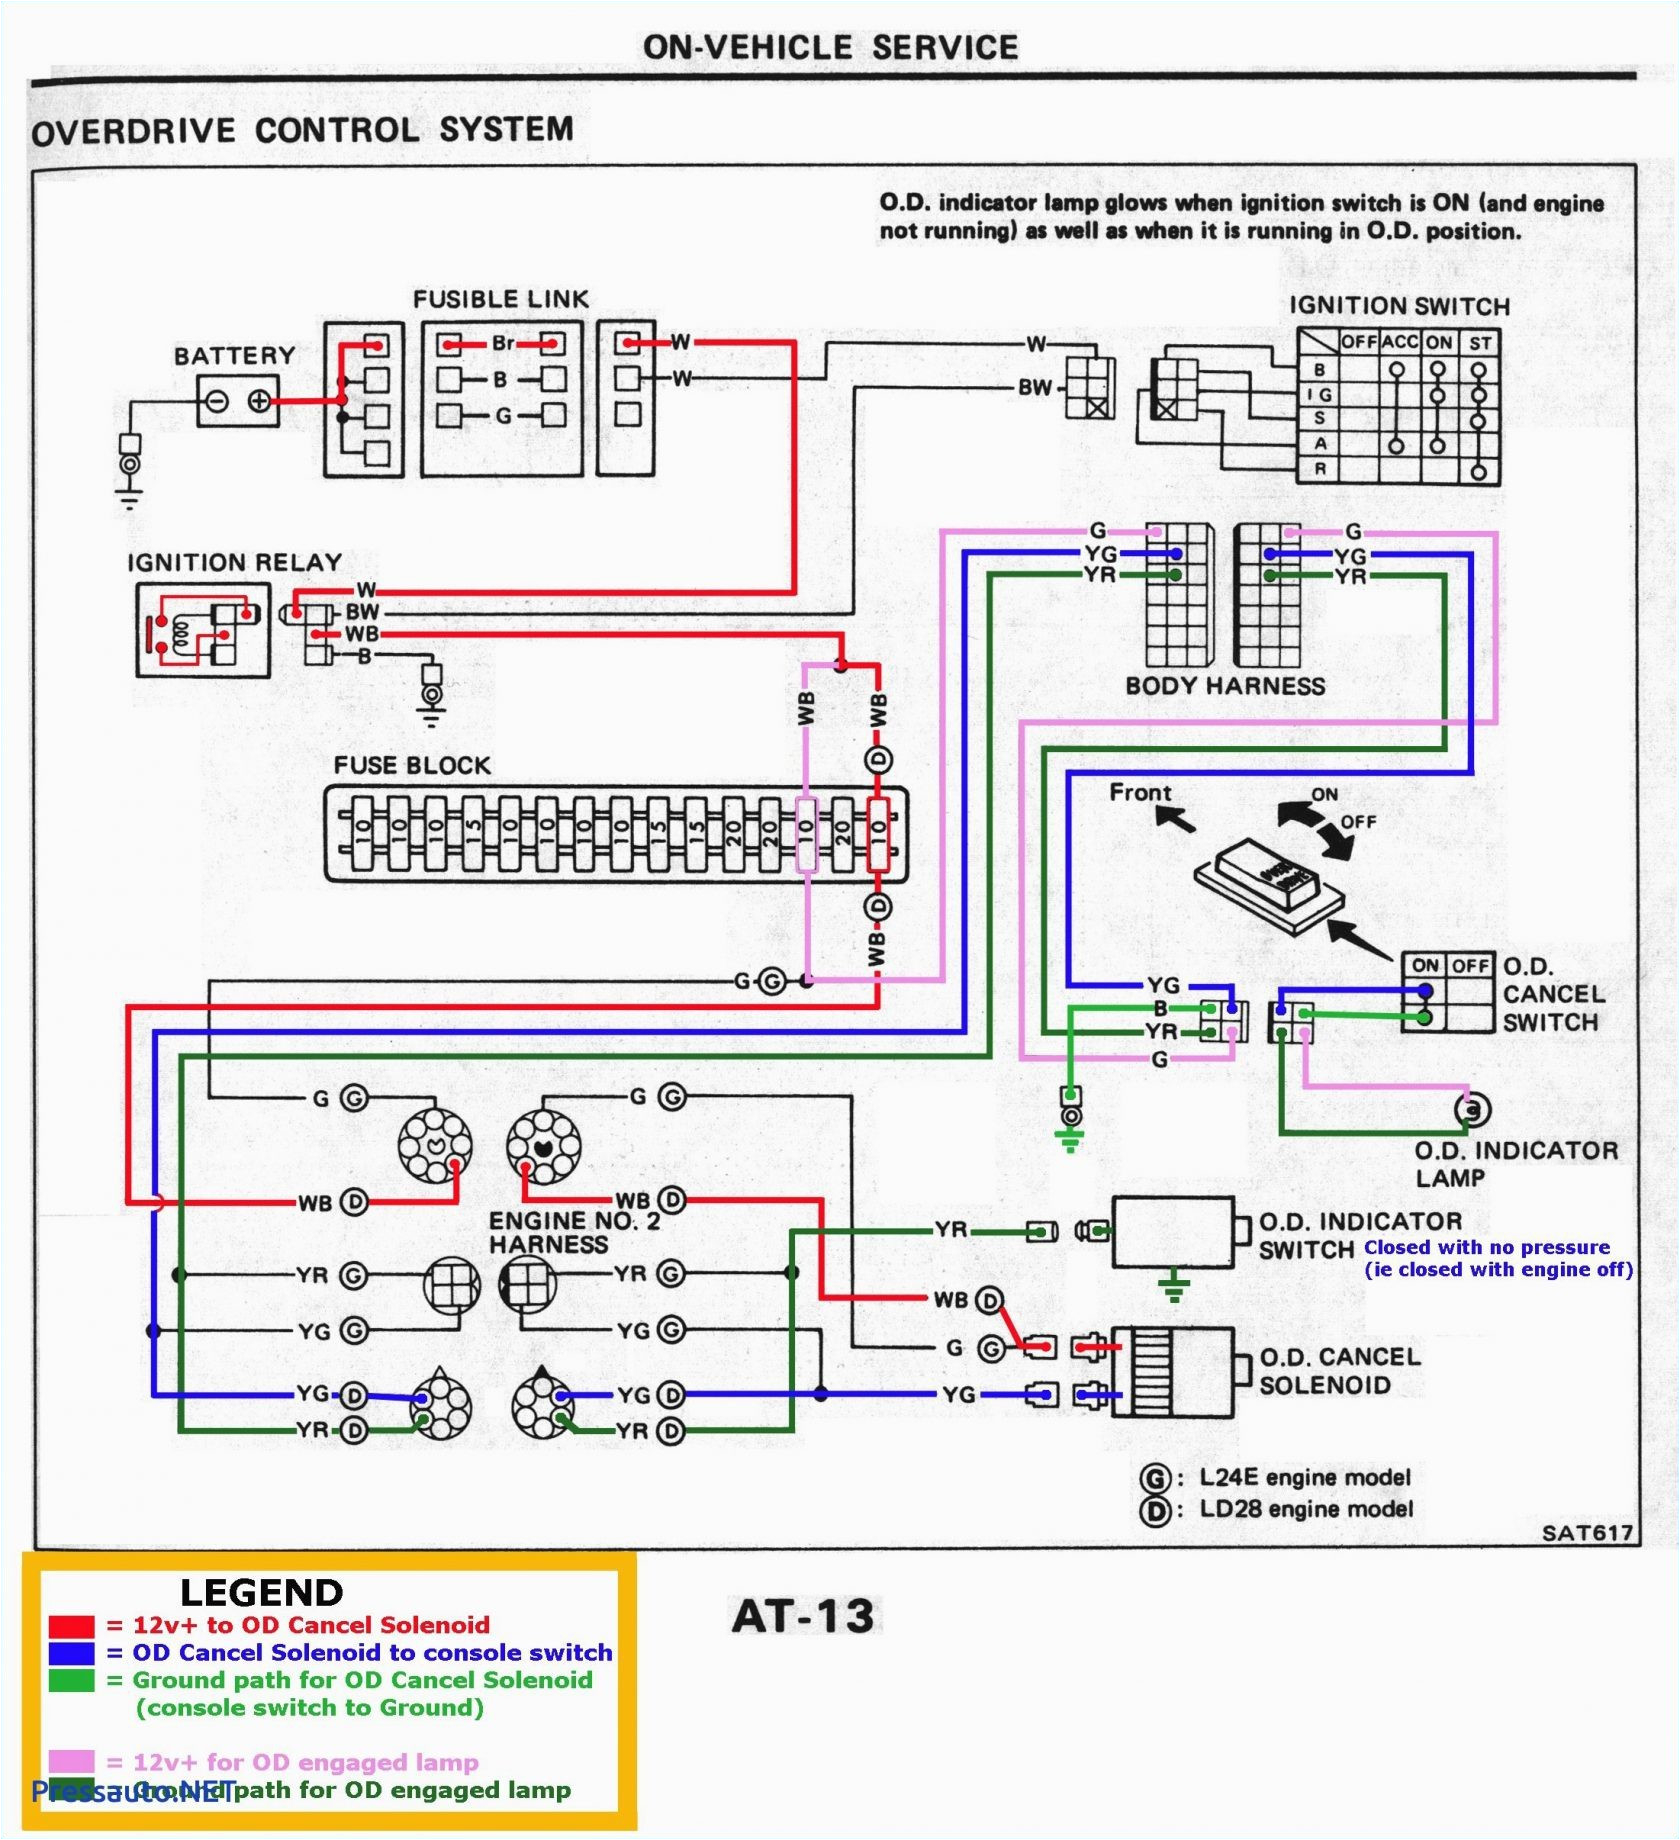 centralux wiring diagram wiring diagram expert aerus centralux wiring diagram centralux wiring diagram